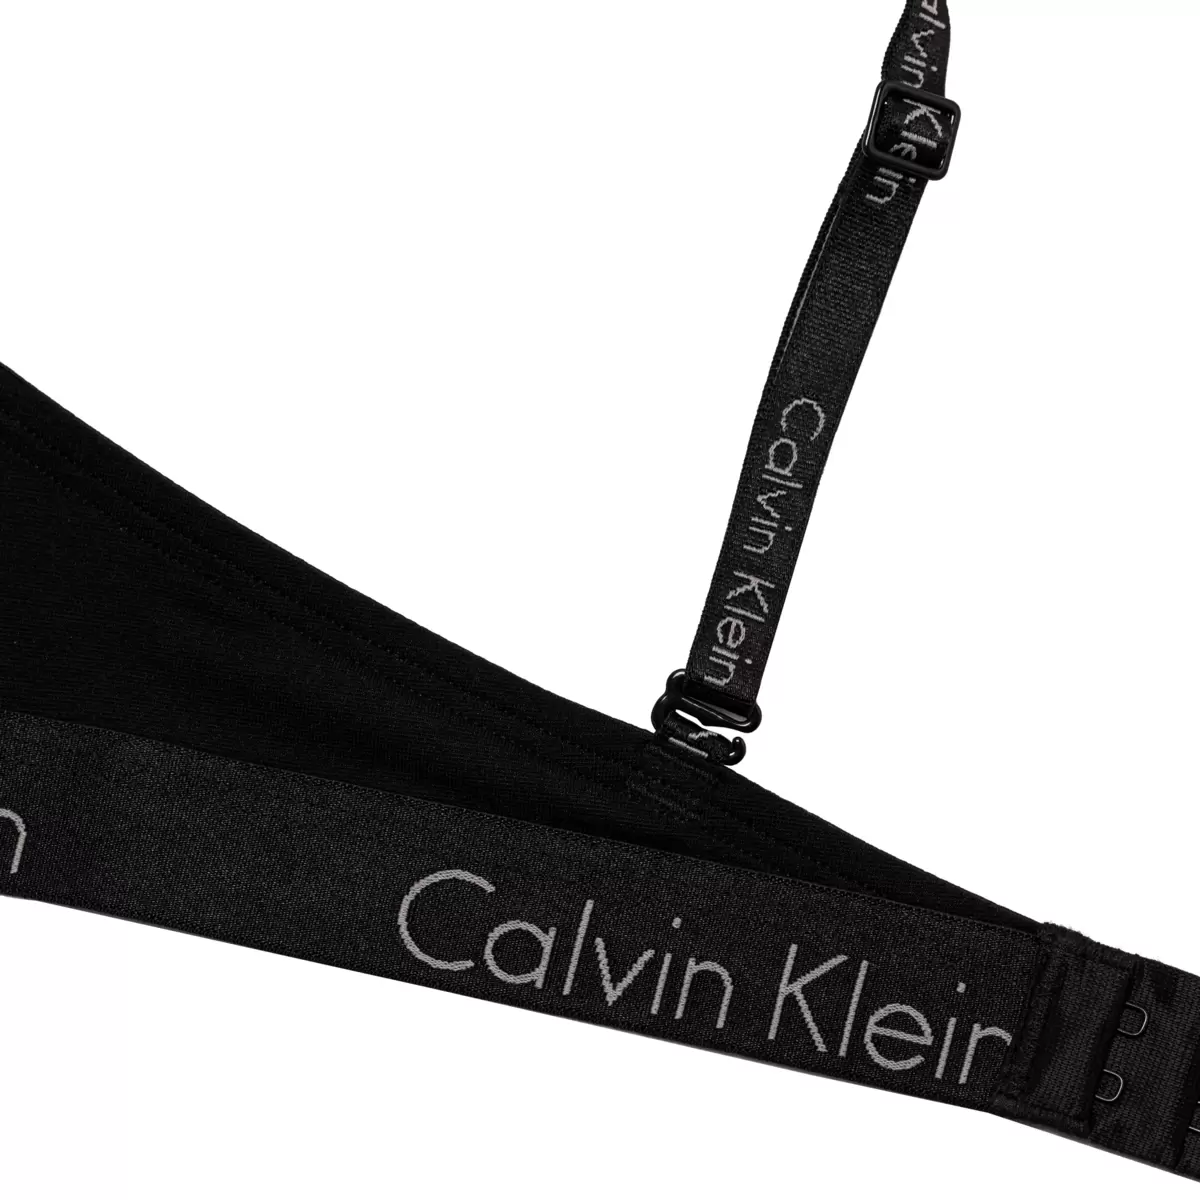 Calvin Klein 女舒適軟鋼圈內衣2入組 黑色 & 裸色 34D